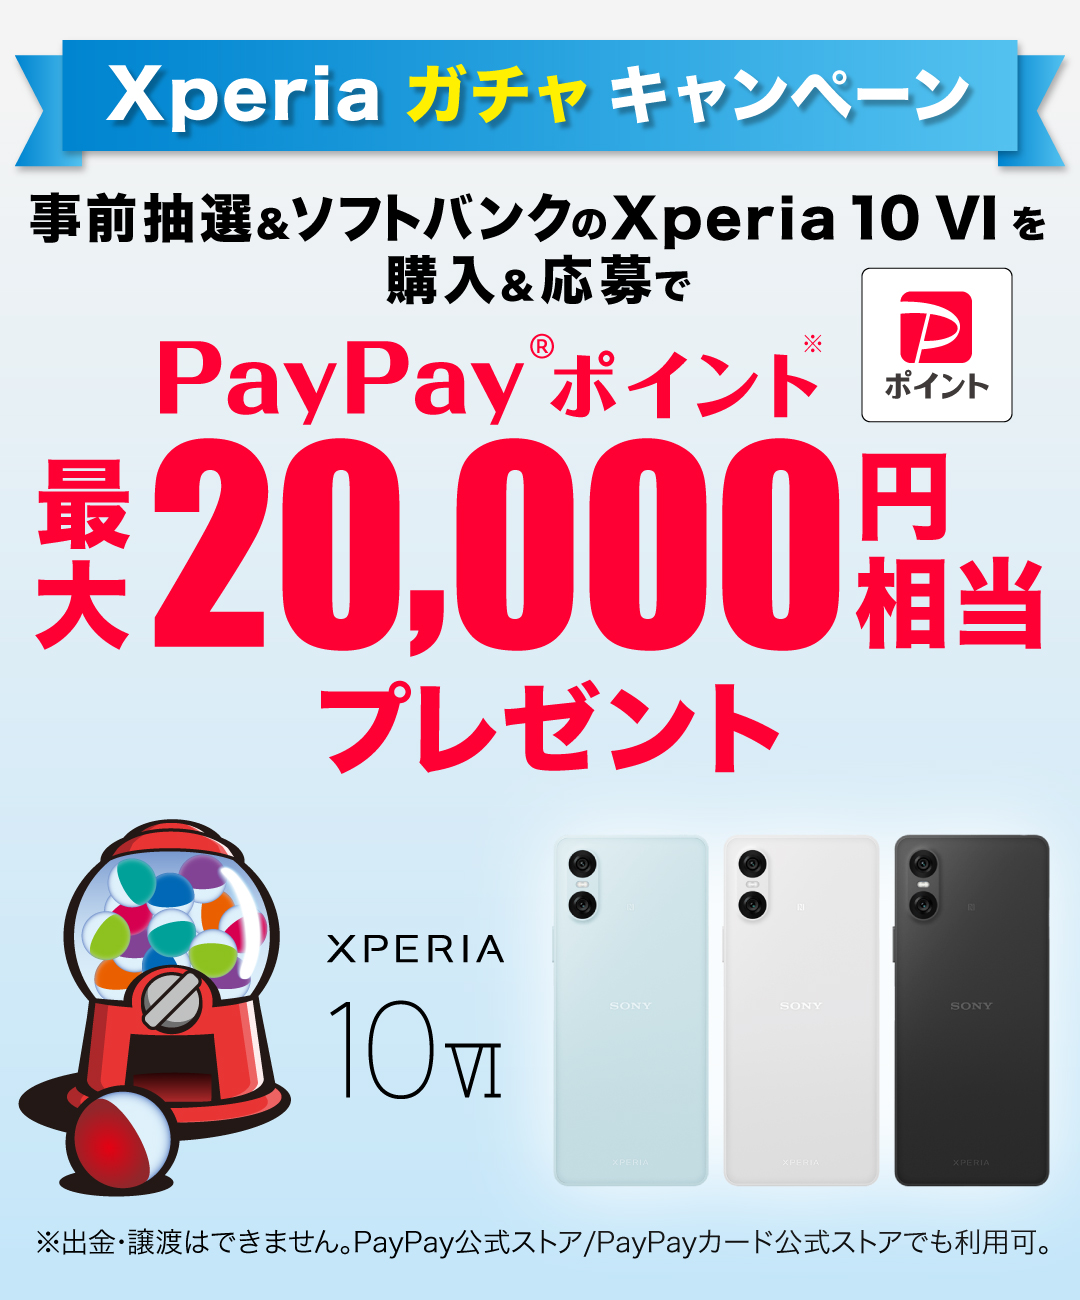 Xperia ガチャ キャンペーン 事前抽選＆ソフトバンクの Xperia 10 VI を購入＆応募で PayPayポイント 最大20,000円相当プレゼント※出金と譲渡はできません。PayPay/PayPayカード公式ストアでも利用可。